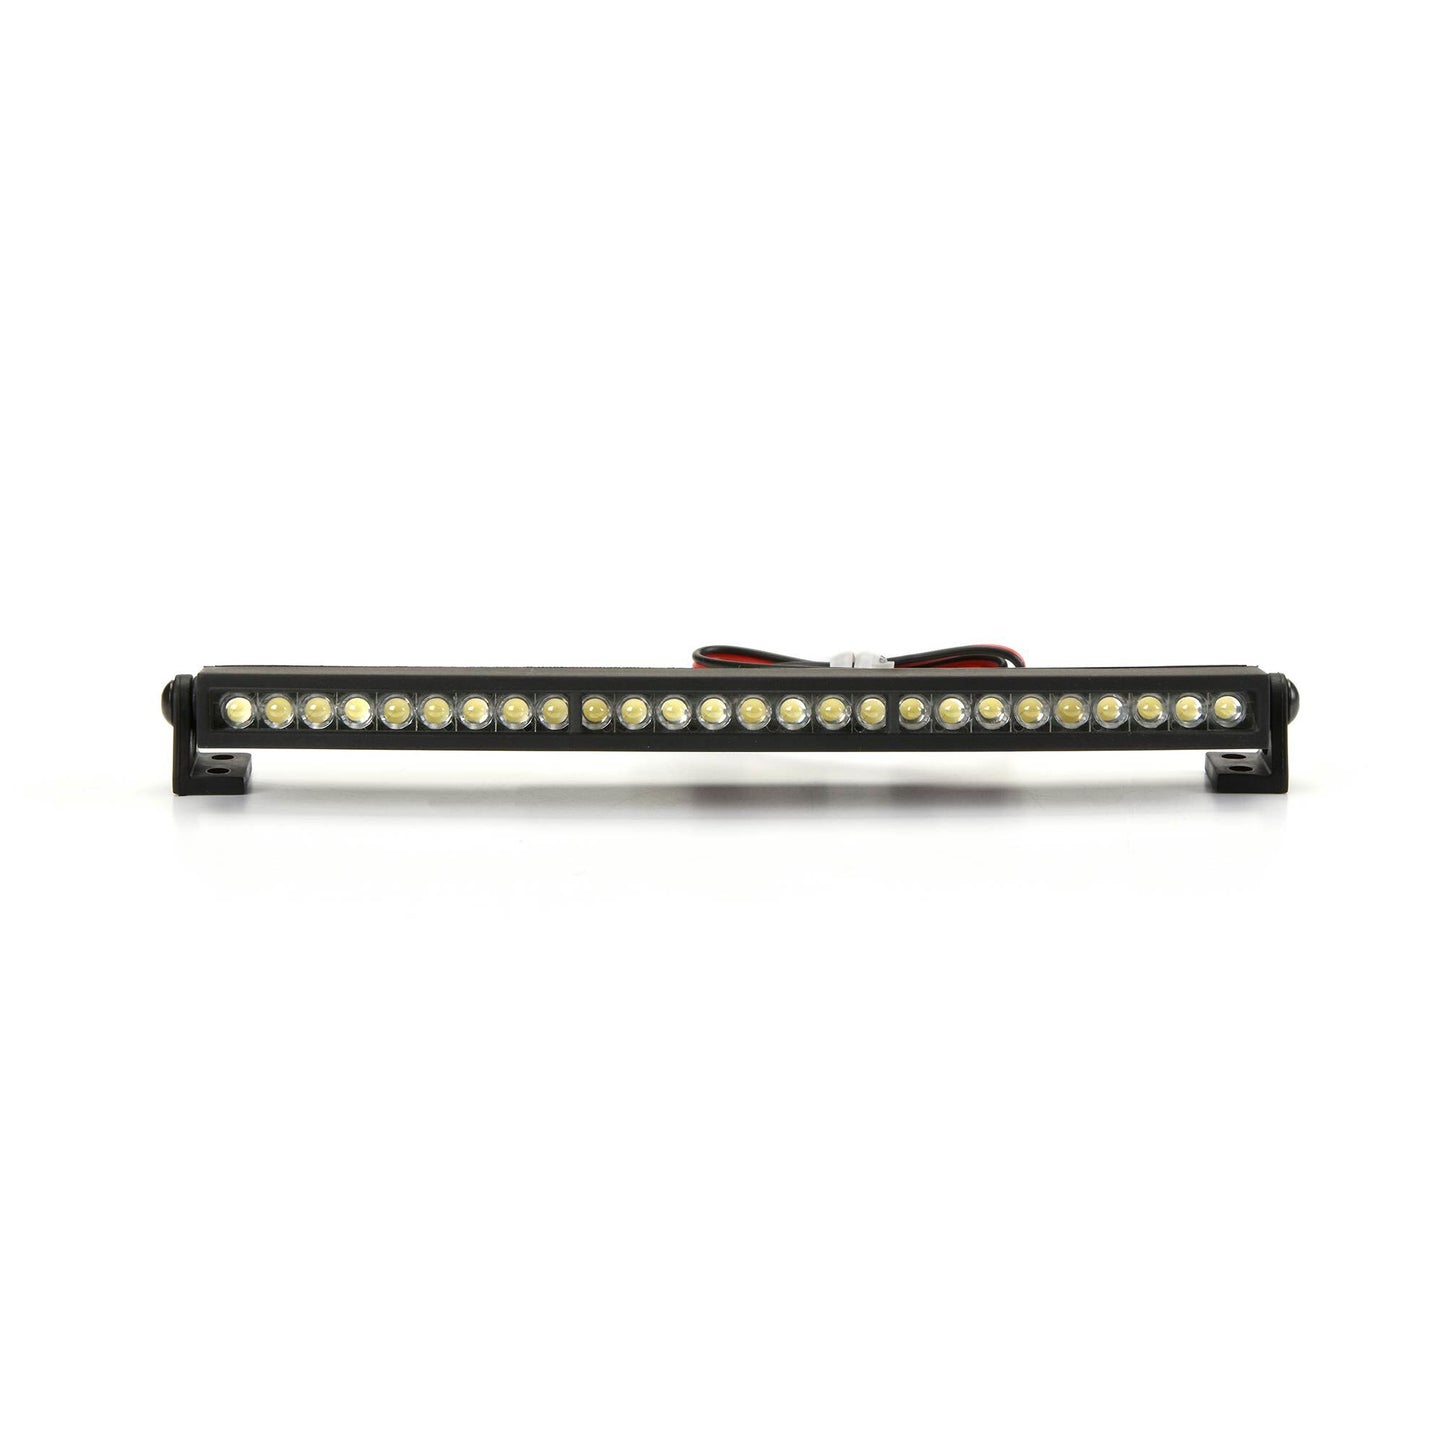 Pro-Line 5" Super-Bright Pro-Line LED Light Bar Kit 6V-12V (Curved)